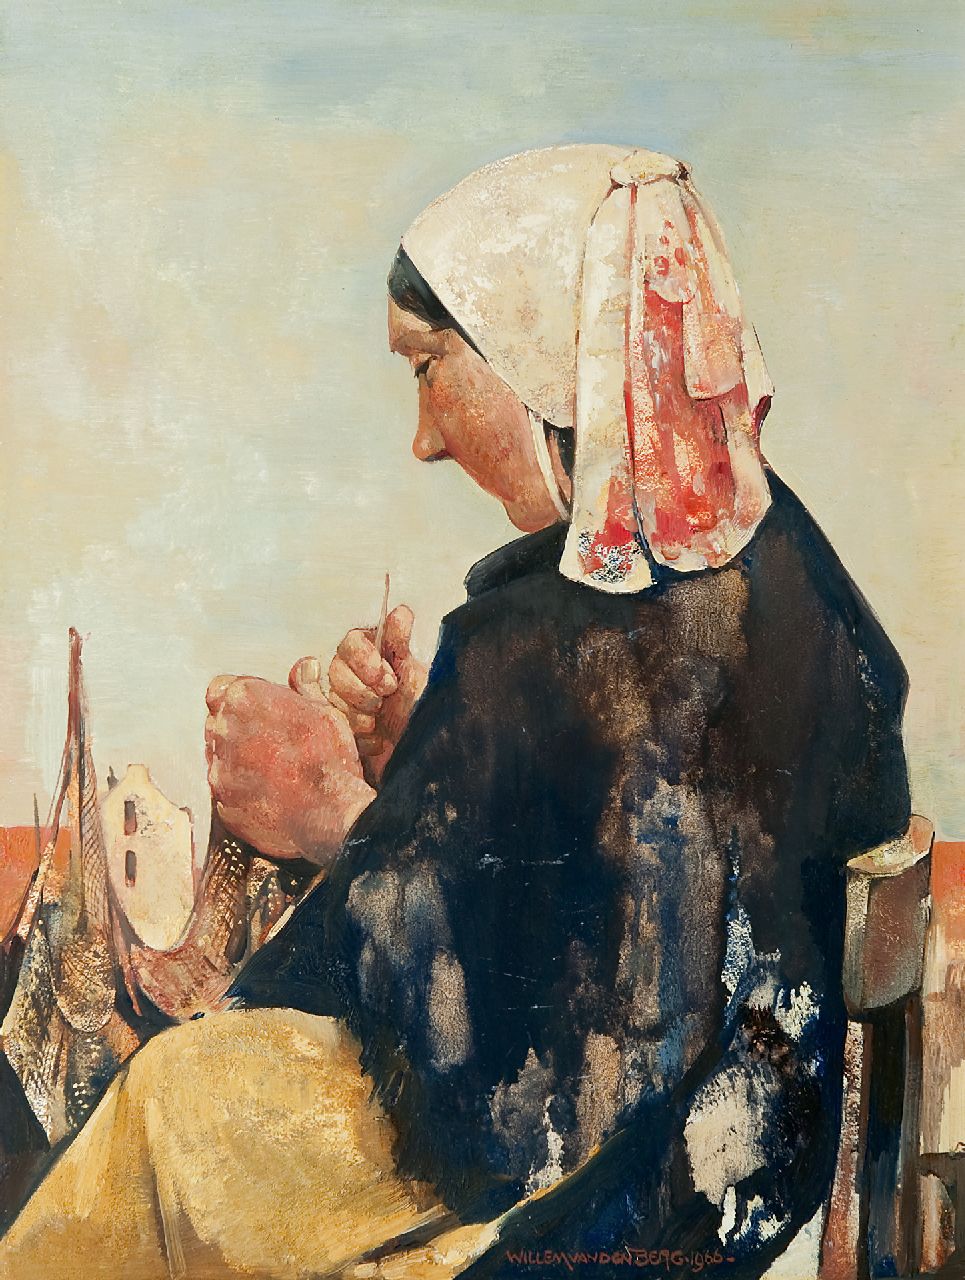 Berg W.H. van den | 'Willem' Hendrik van den Berg | Paintings offered for sale | Mending the nets, Scheveningen, oil on painter's board 39.8 x 29.9 cm, signed l.r. and dated 1966